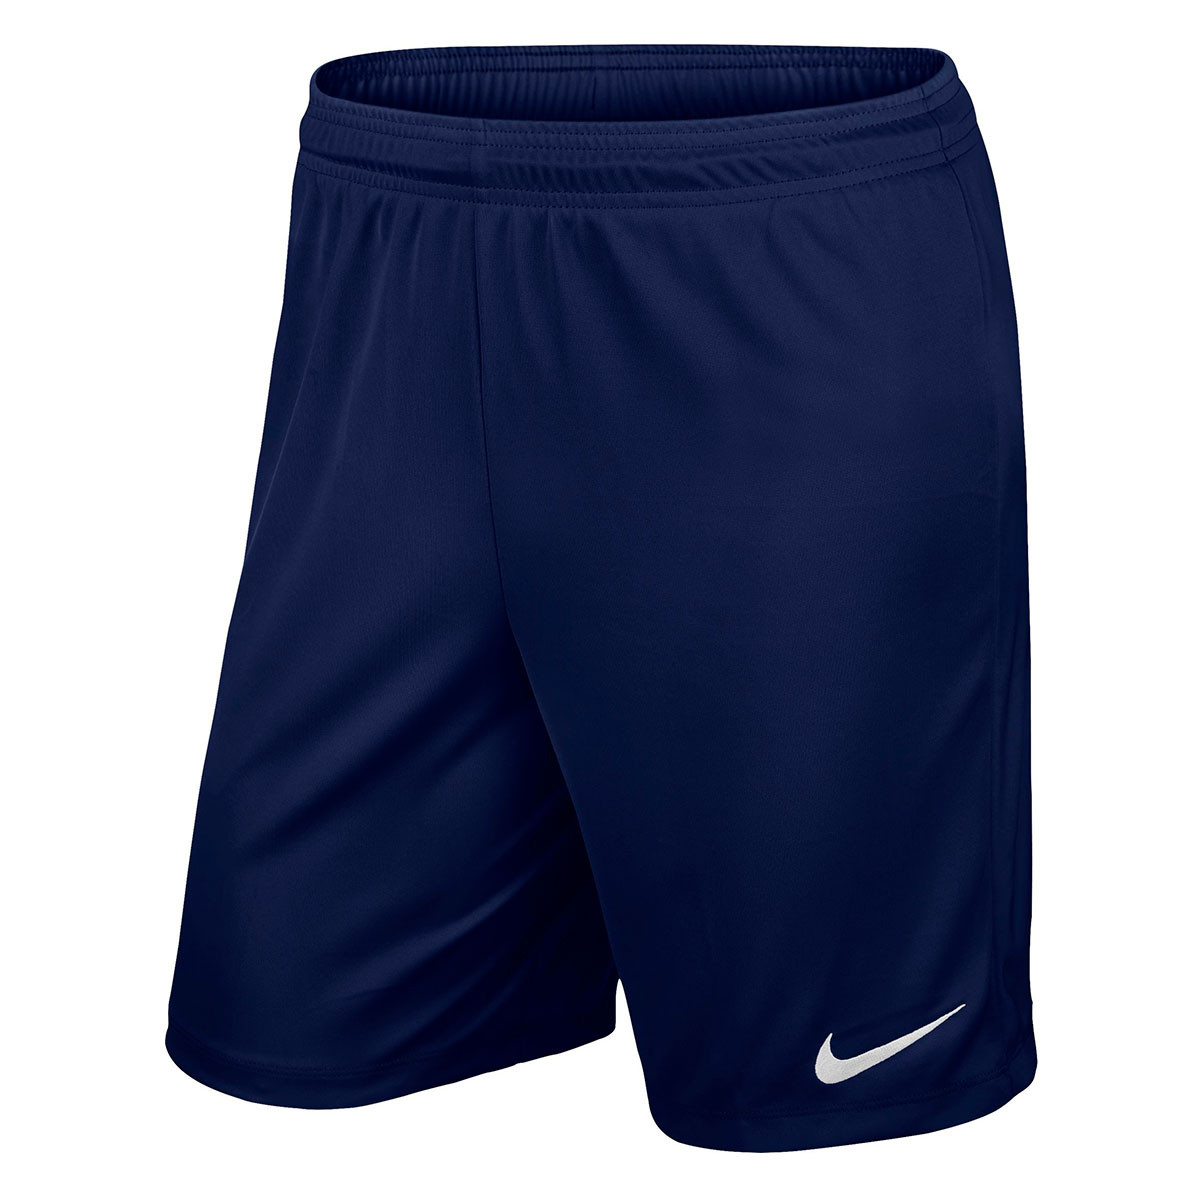 Shorts Nike Park II Knit Midnight navy 